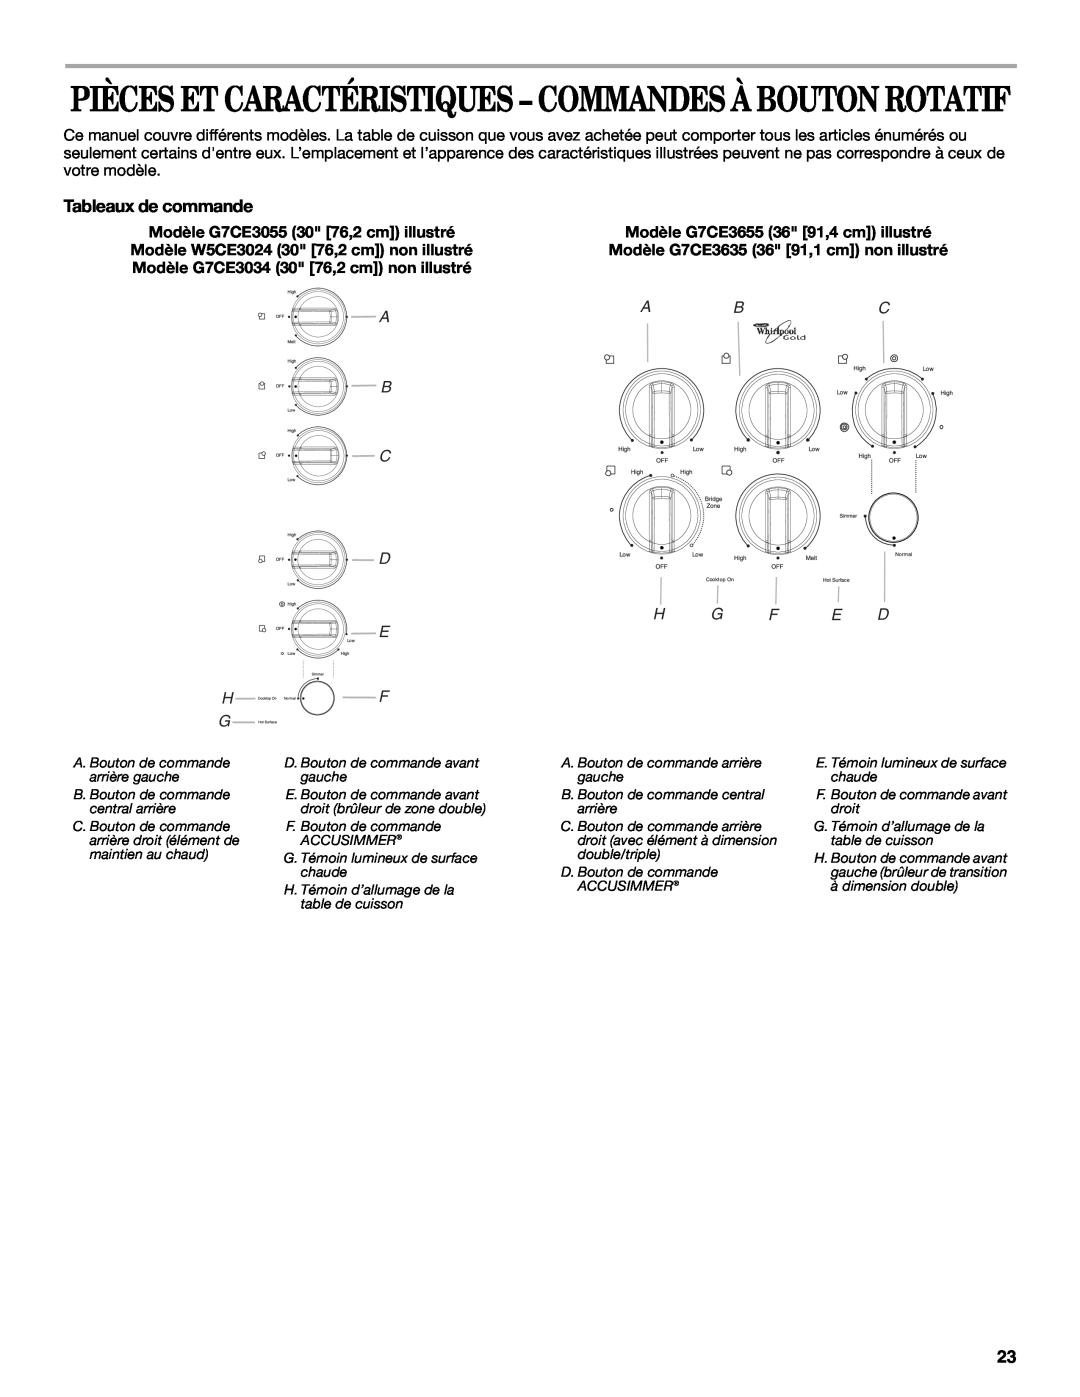 Whirlpool G9CE3675XB manual Tableaux de commande, Modèle G7CE3055 30 76,2 cm illustré, A B C, A Bc H G F E D 